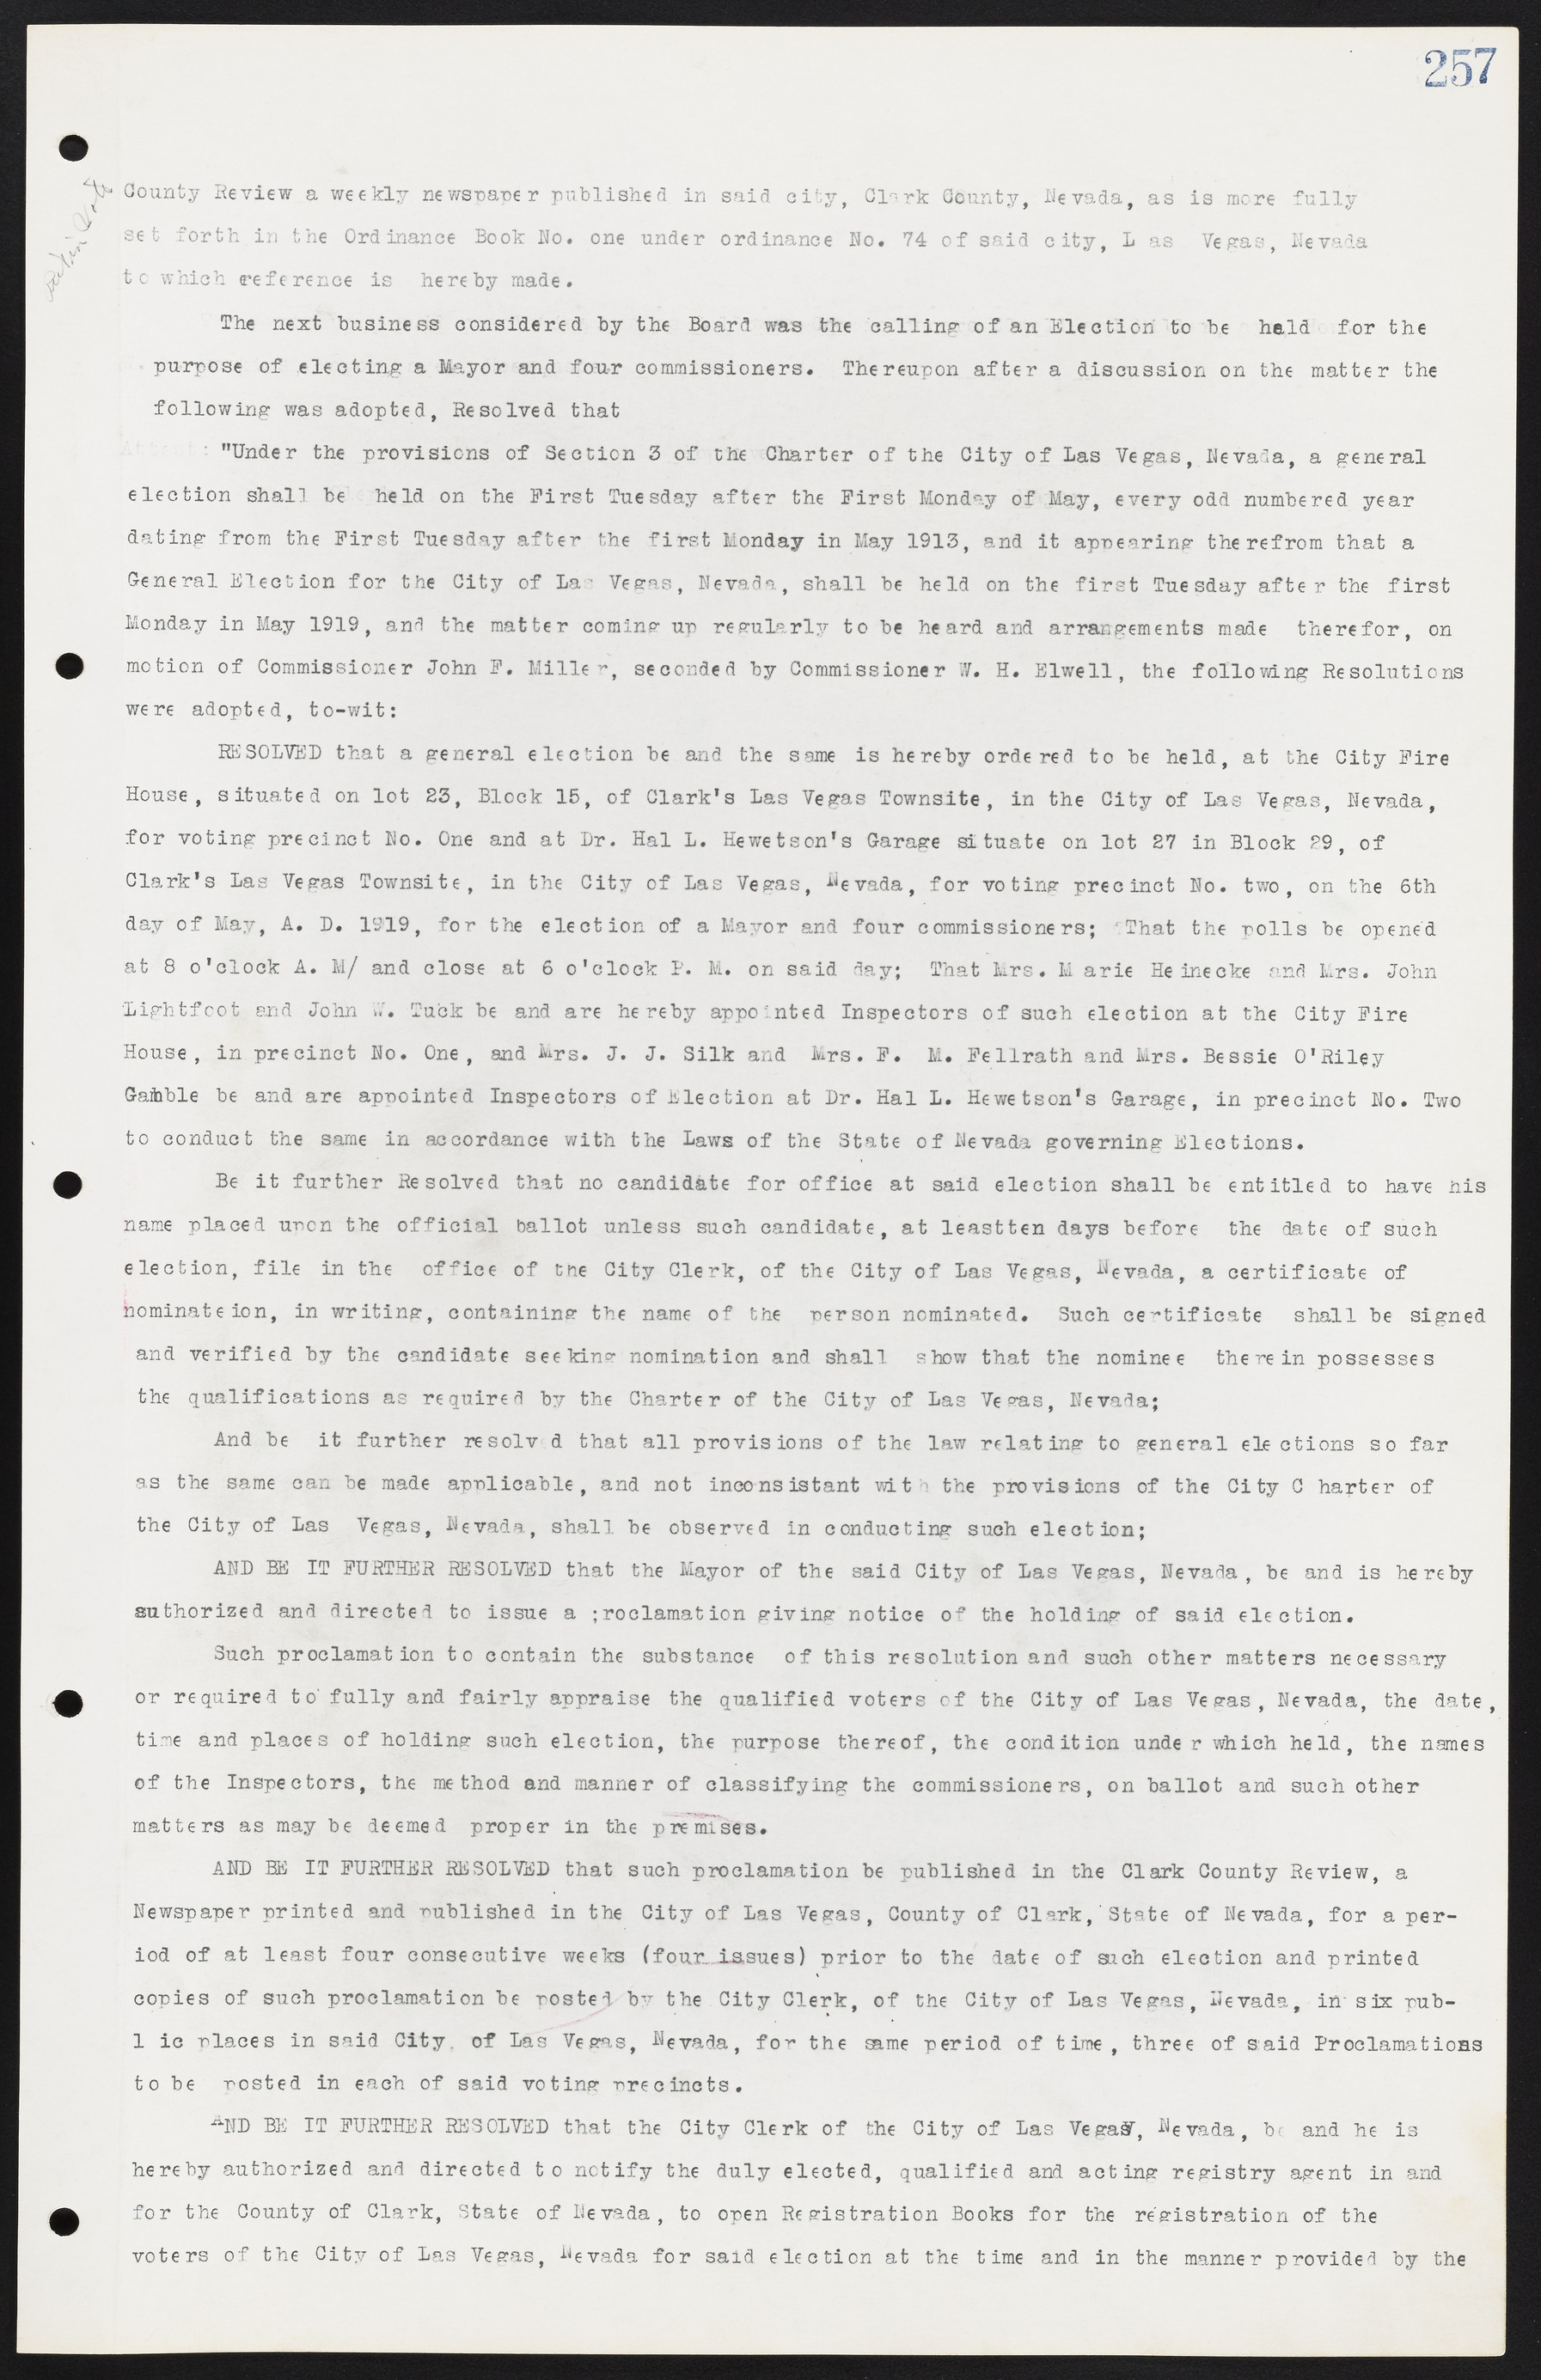 Las Vegas City Commission Minutes, June 22, 1911 to February 7, 1922, lvc000001-273